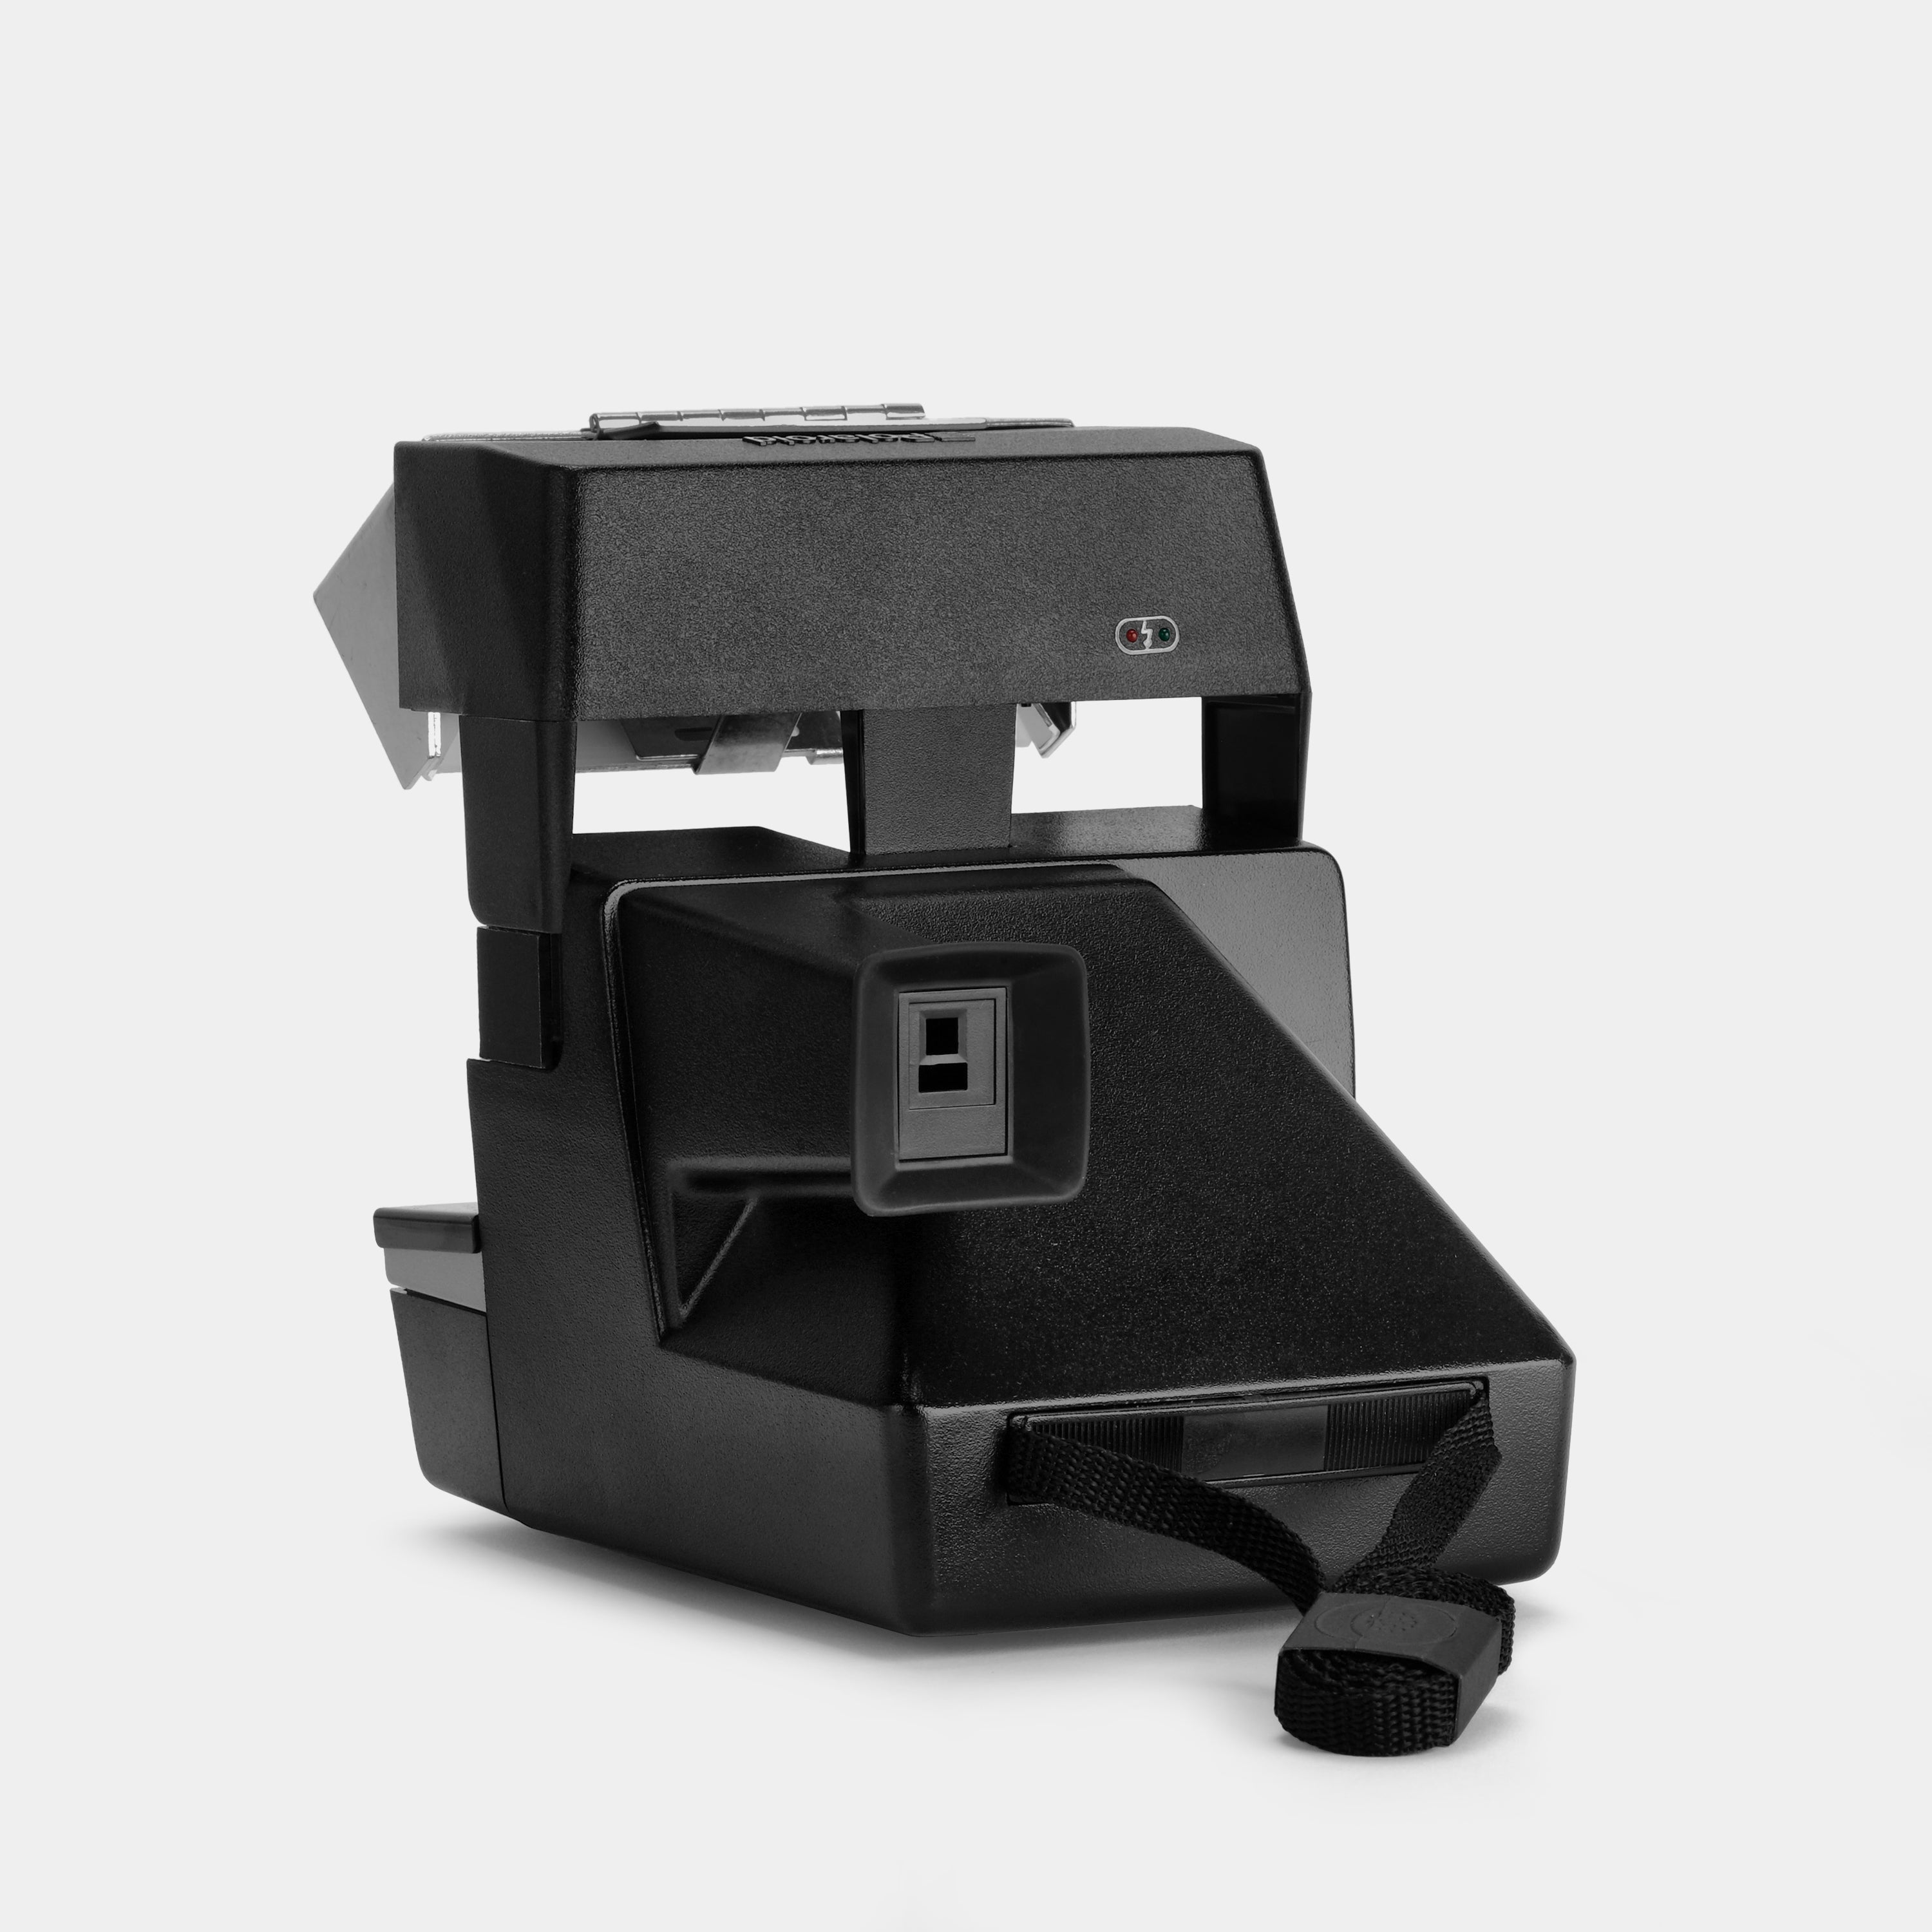 Polaroid 600 Dine Close-Up Model IV Instant Film Camera